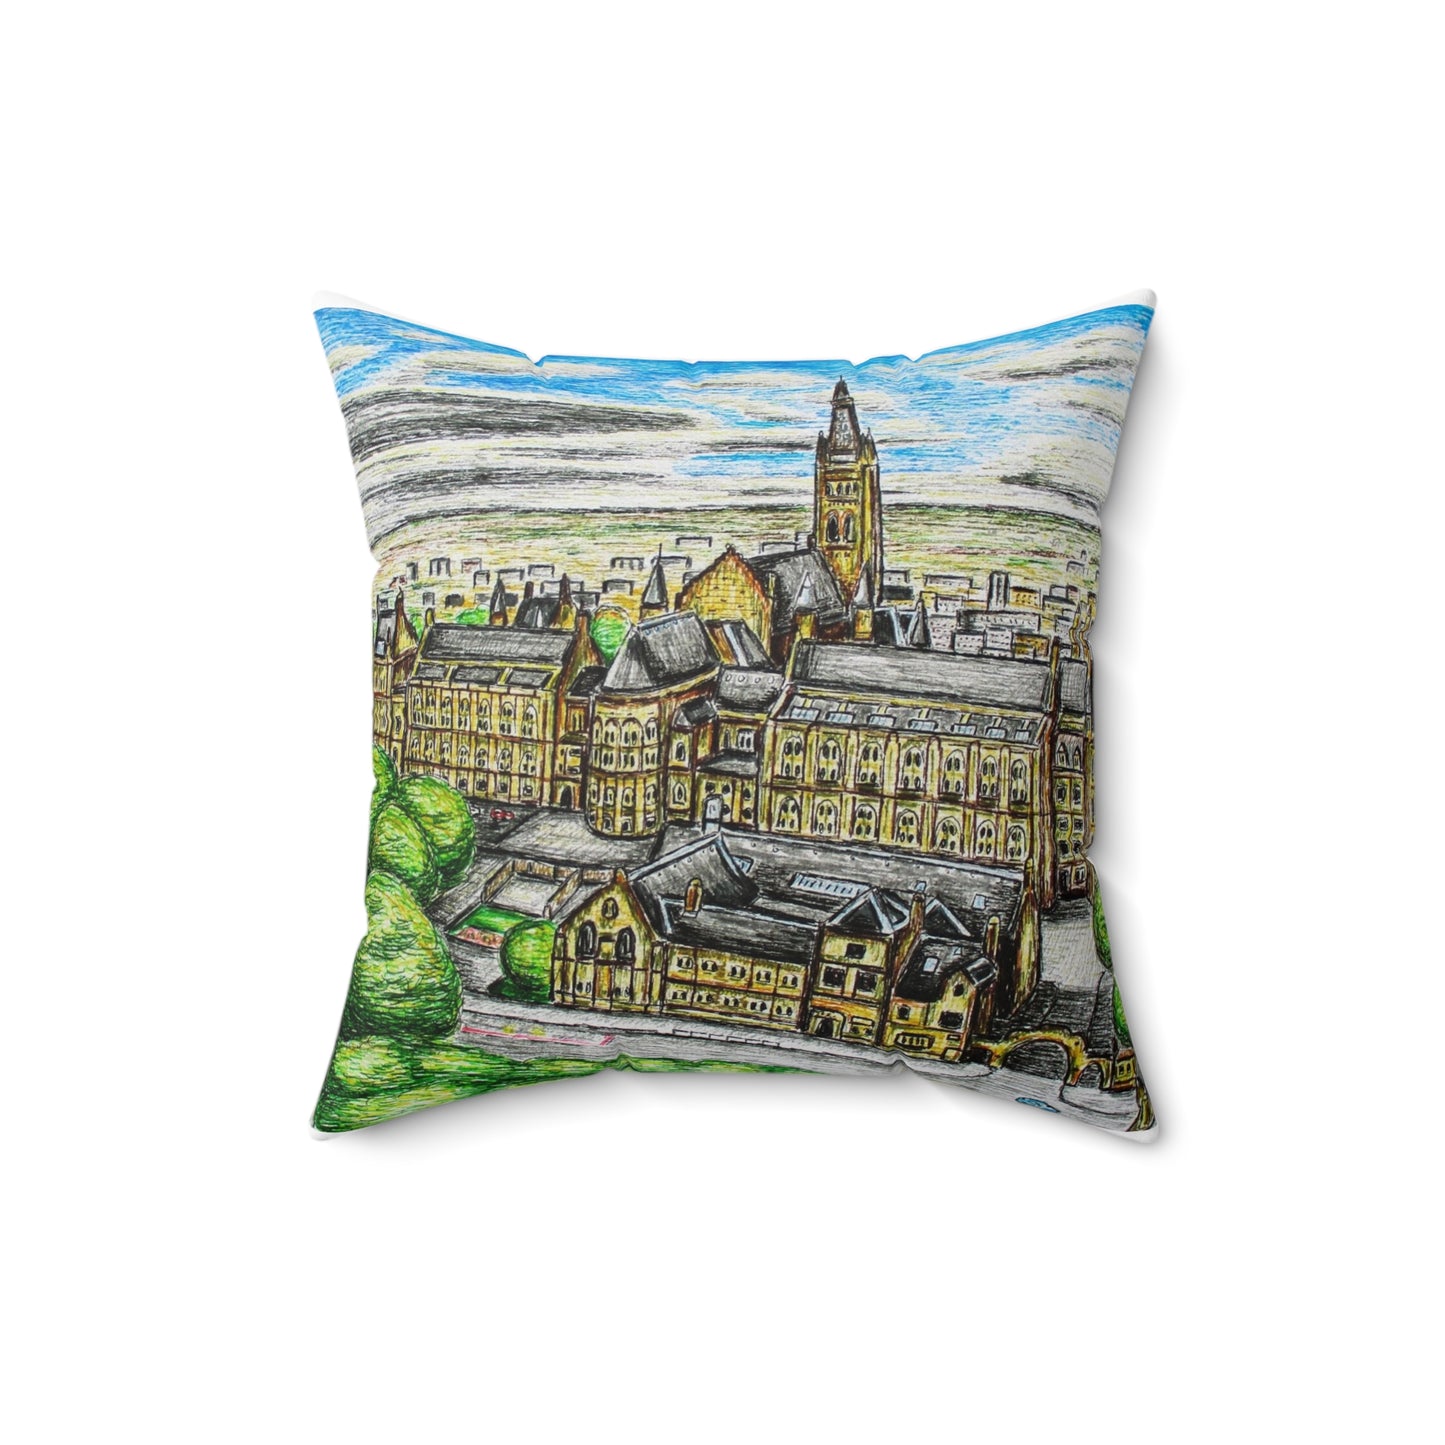 Indoor decorative cushion- Glasgow University